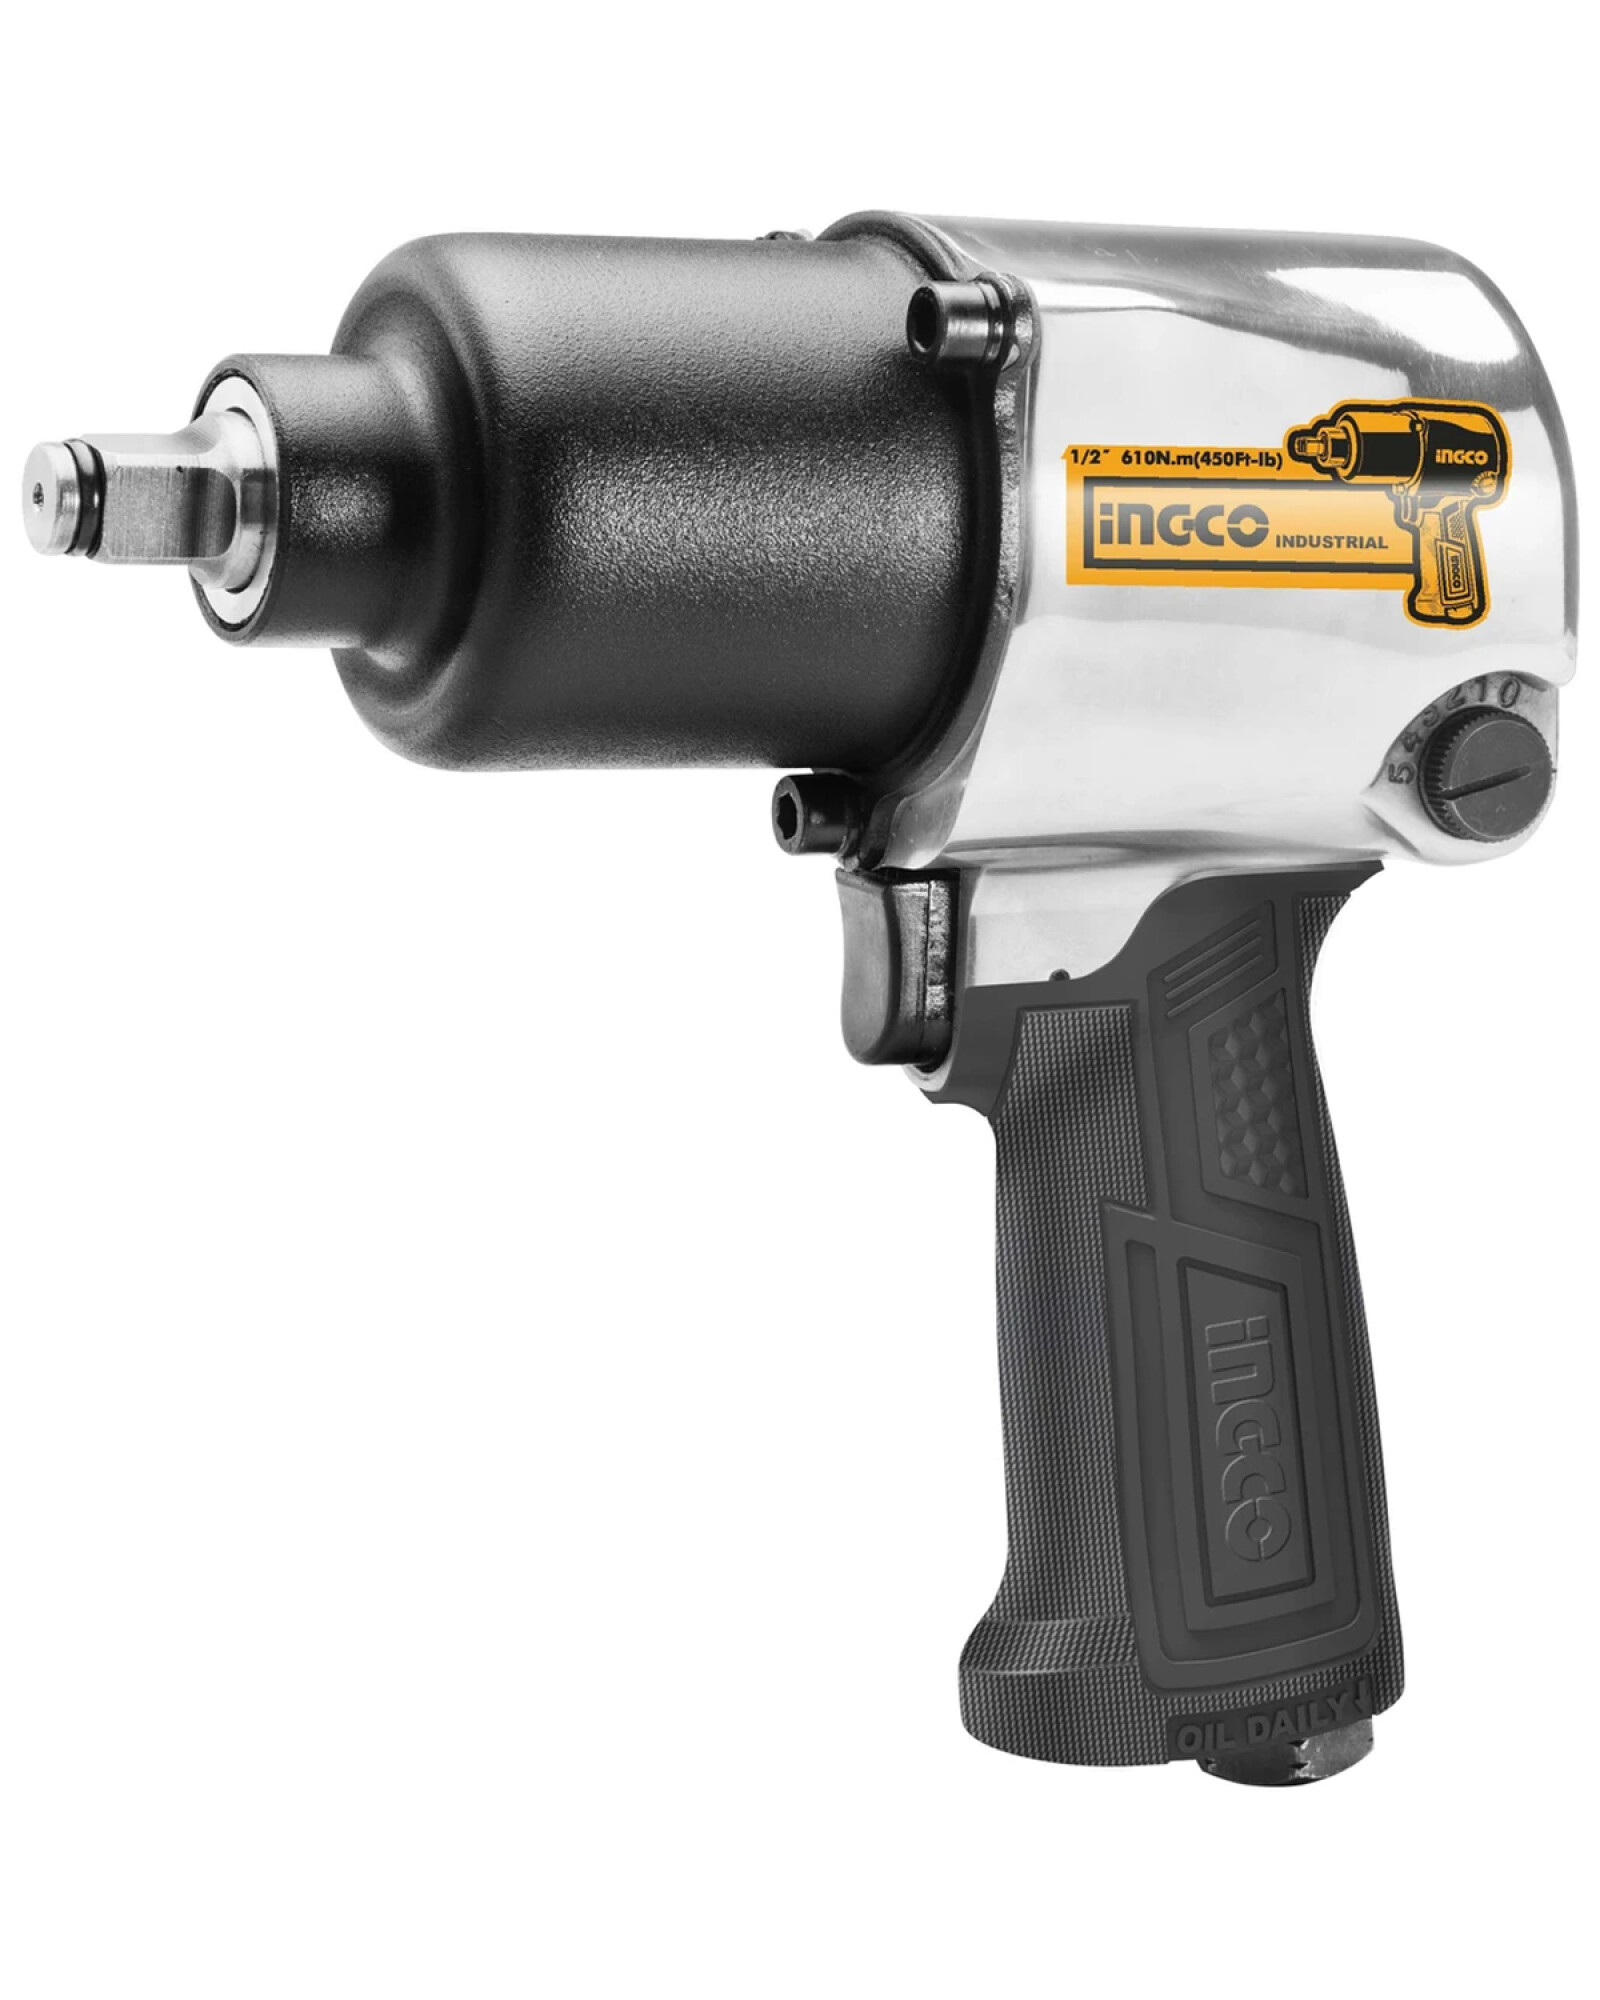 Pistola neumática de impacto 1/2 con accesorios INGCO - Multifrío